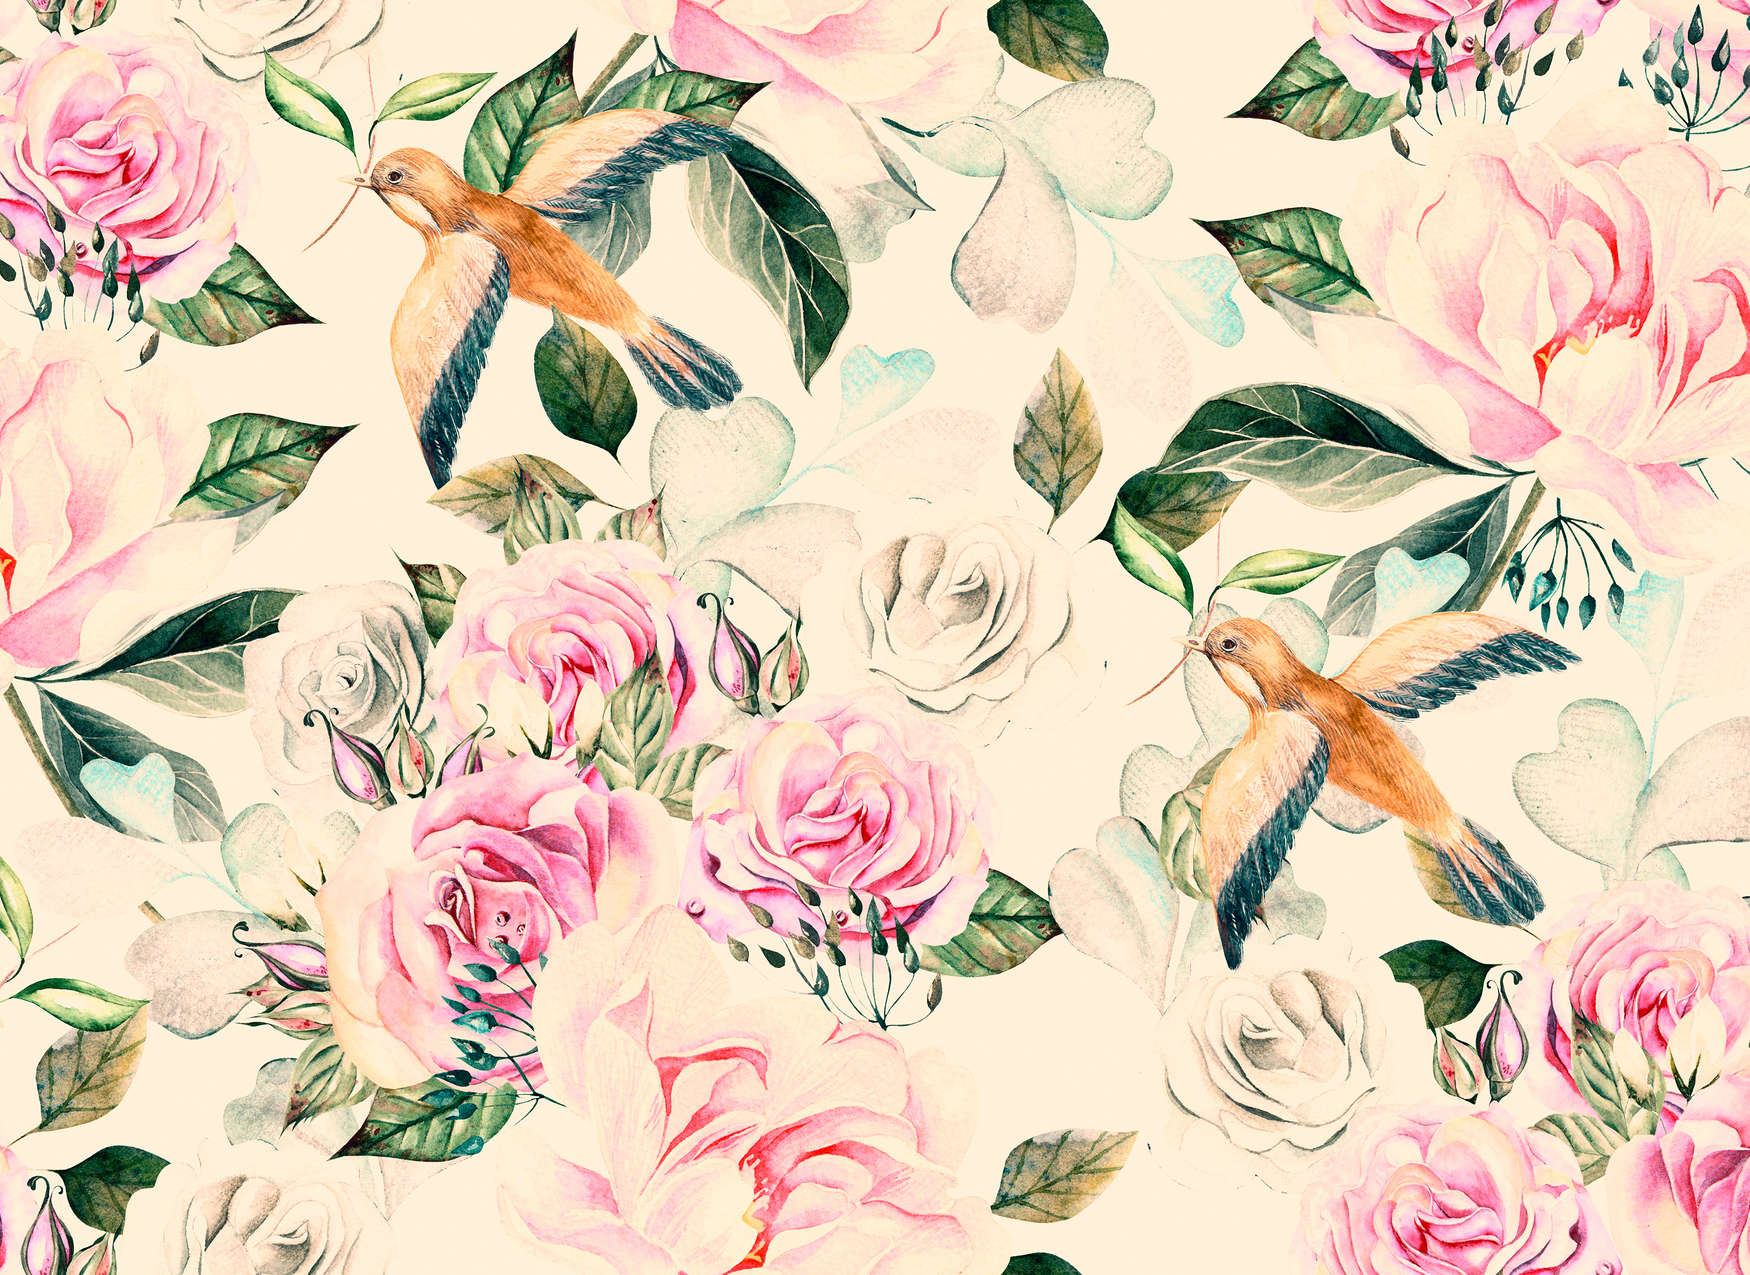             Vintage stijl speelse bloemen en vogels - crème, roze, groen
        